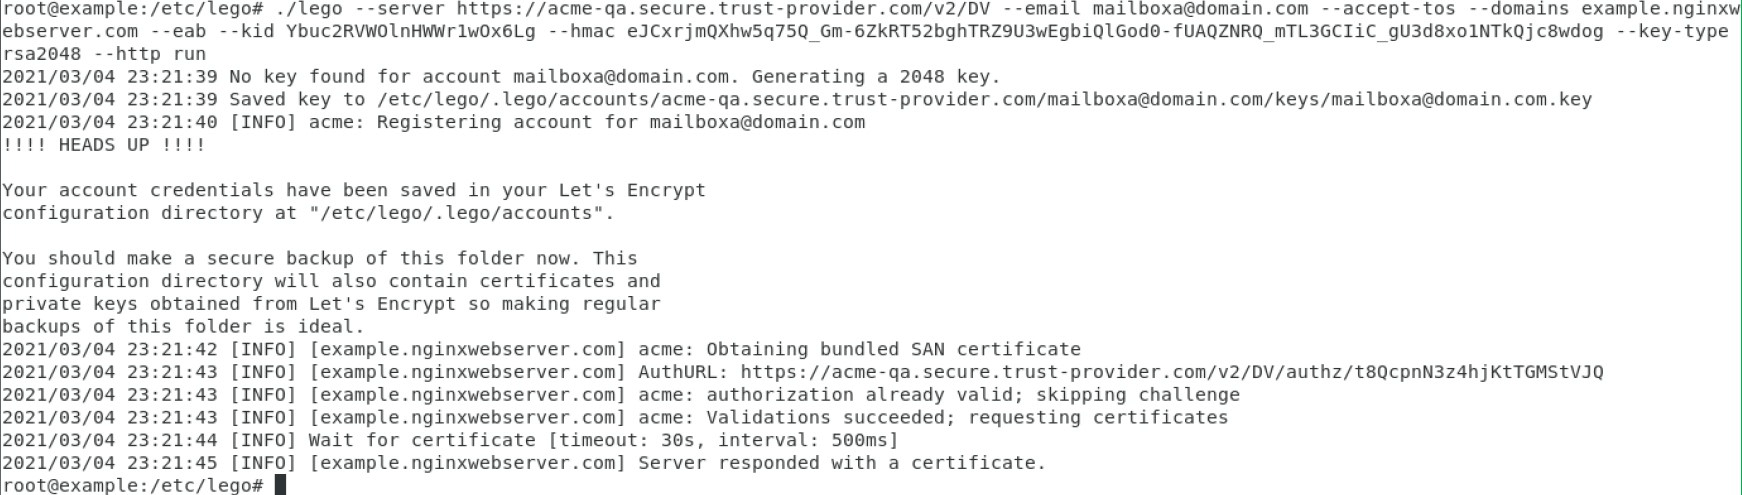 DV certificate example